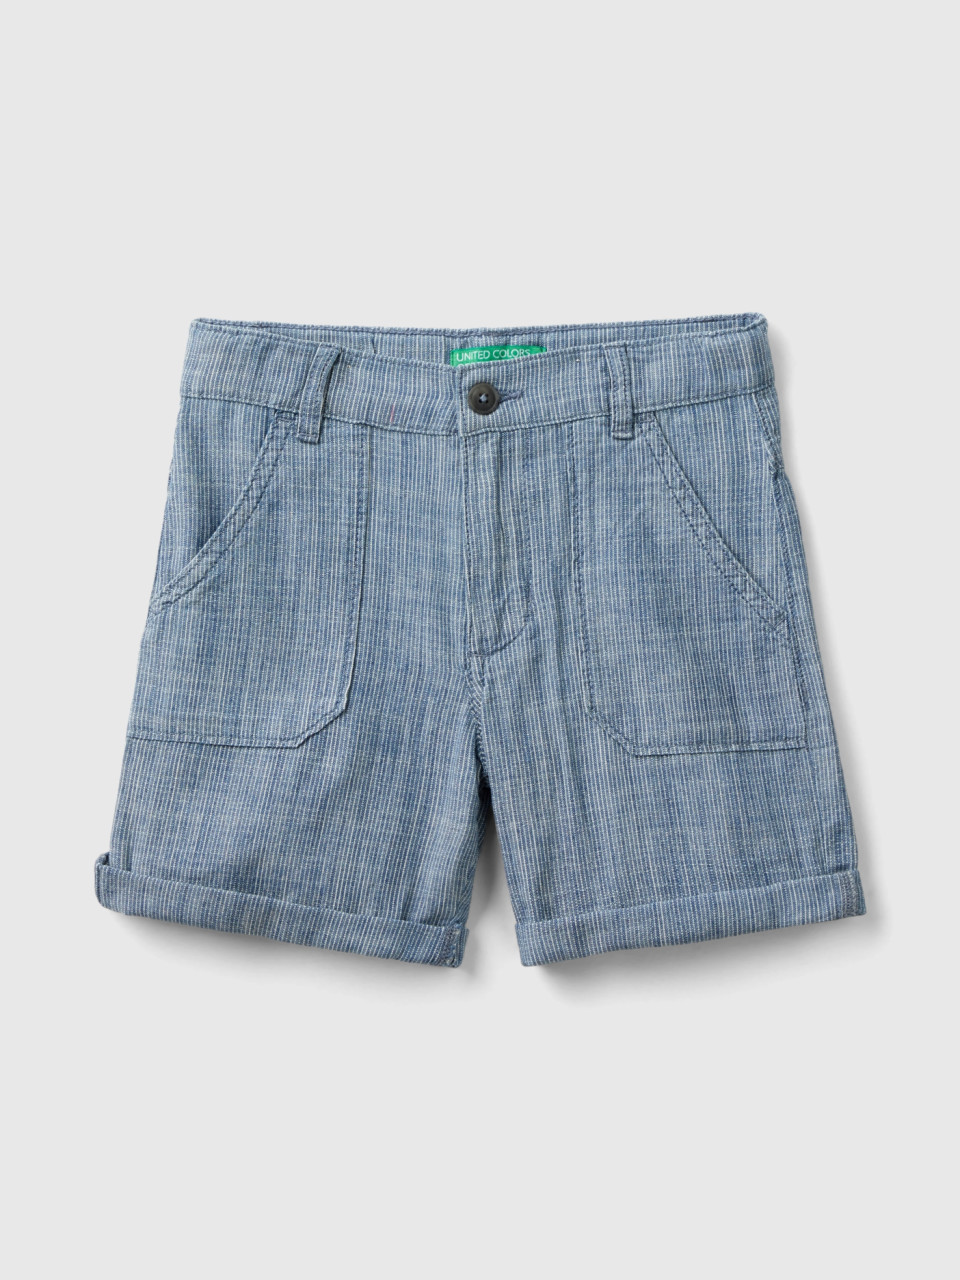 Benetton, Striped Chambray Bermuda Shorts, Blue, Kids